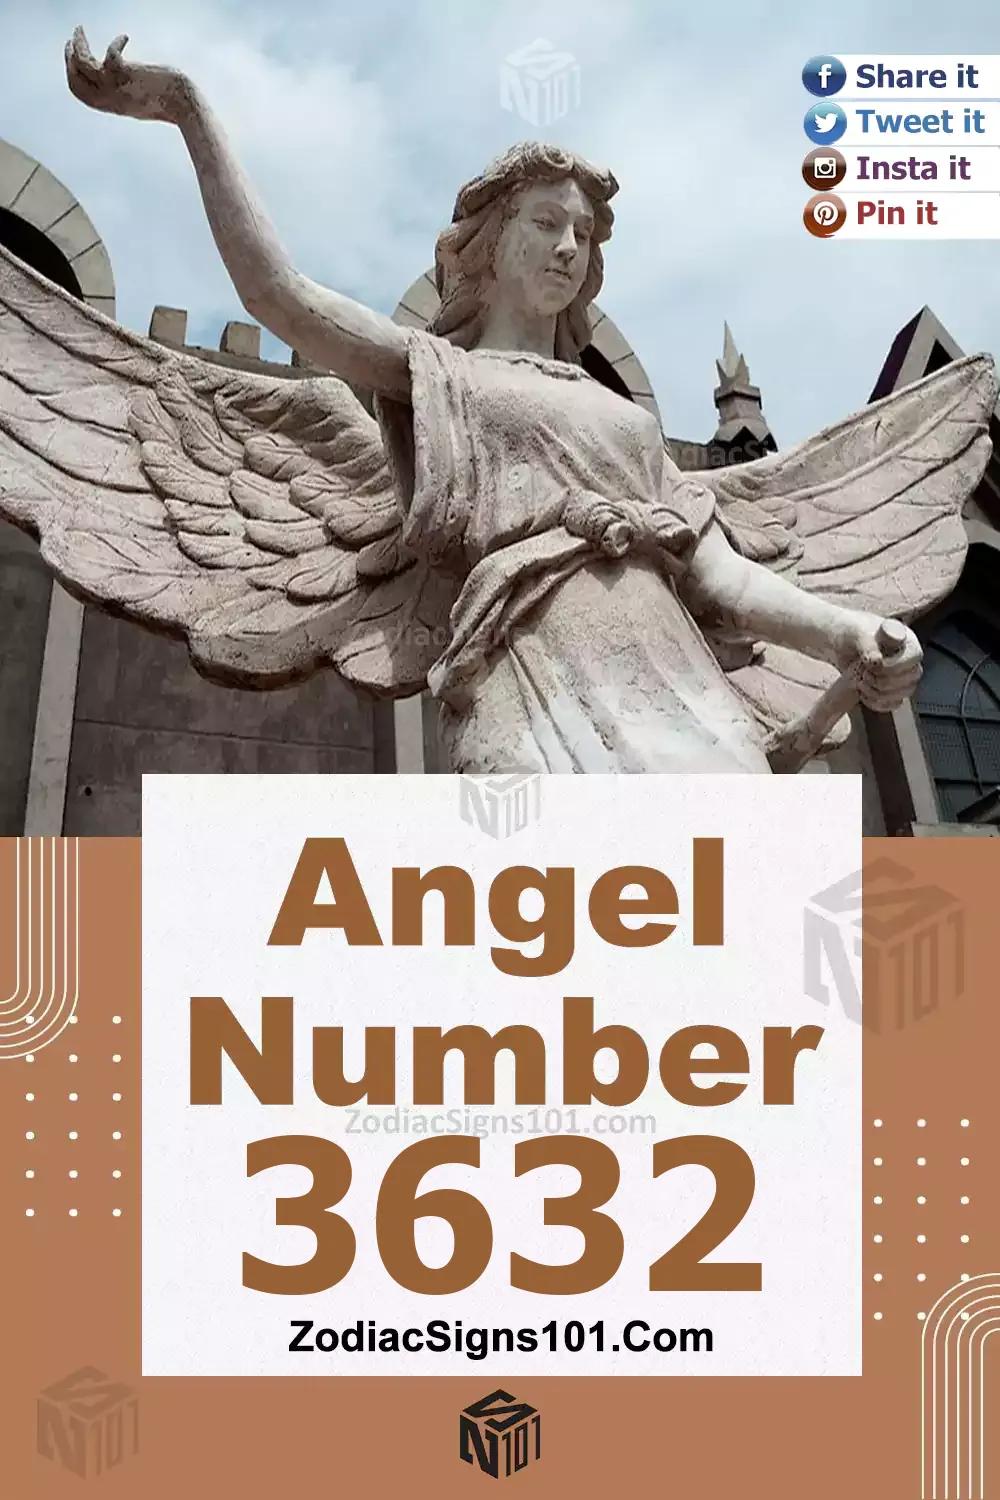 3632-Angel-Number-Meaning.jpg